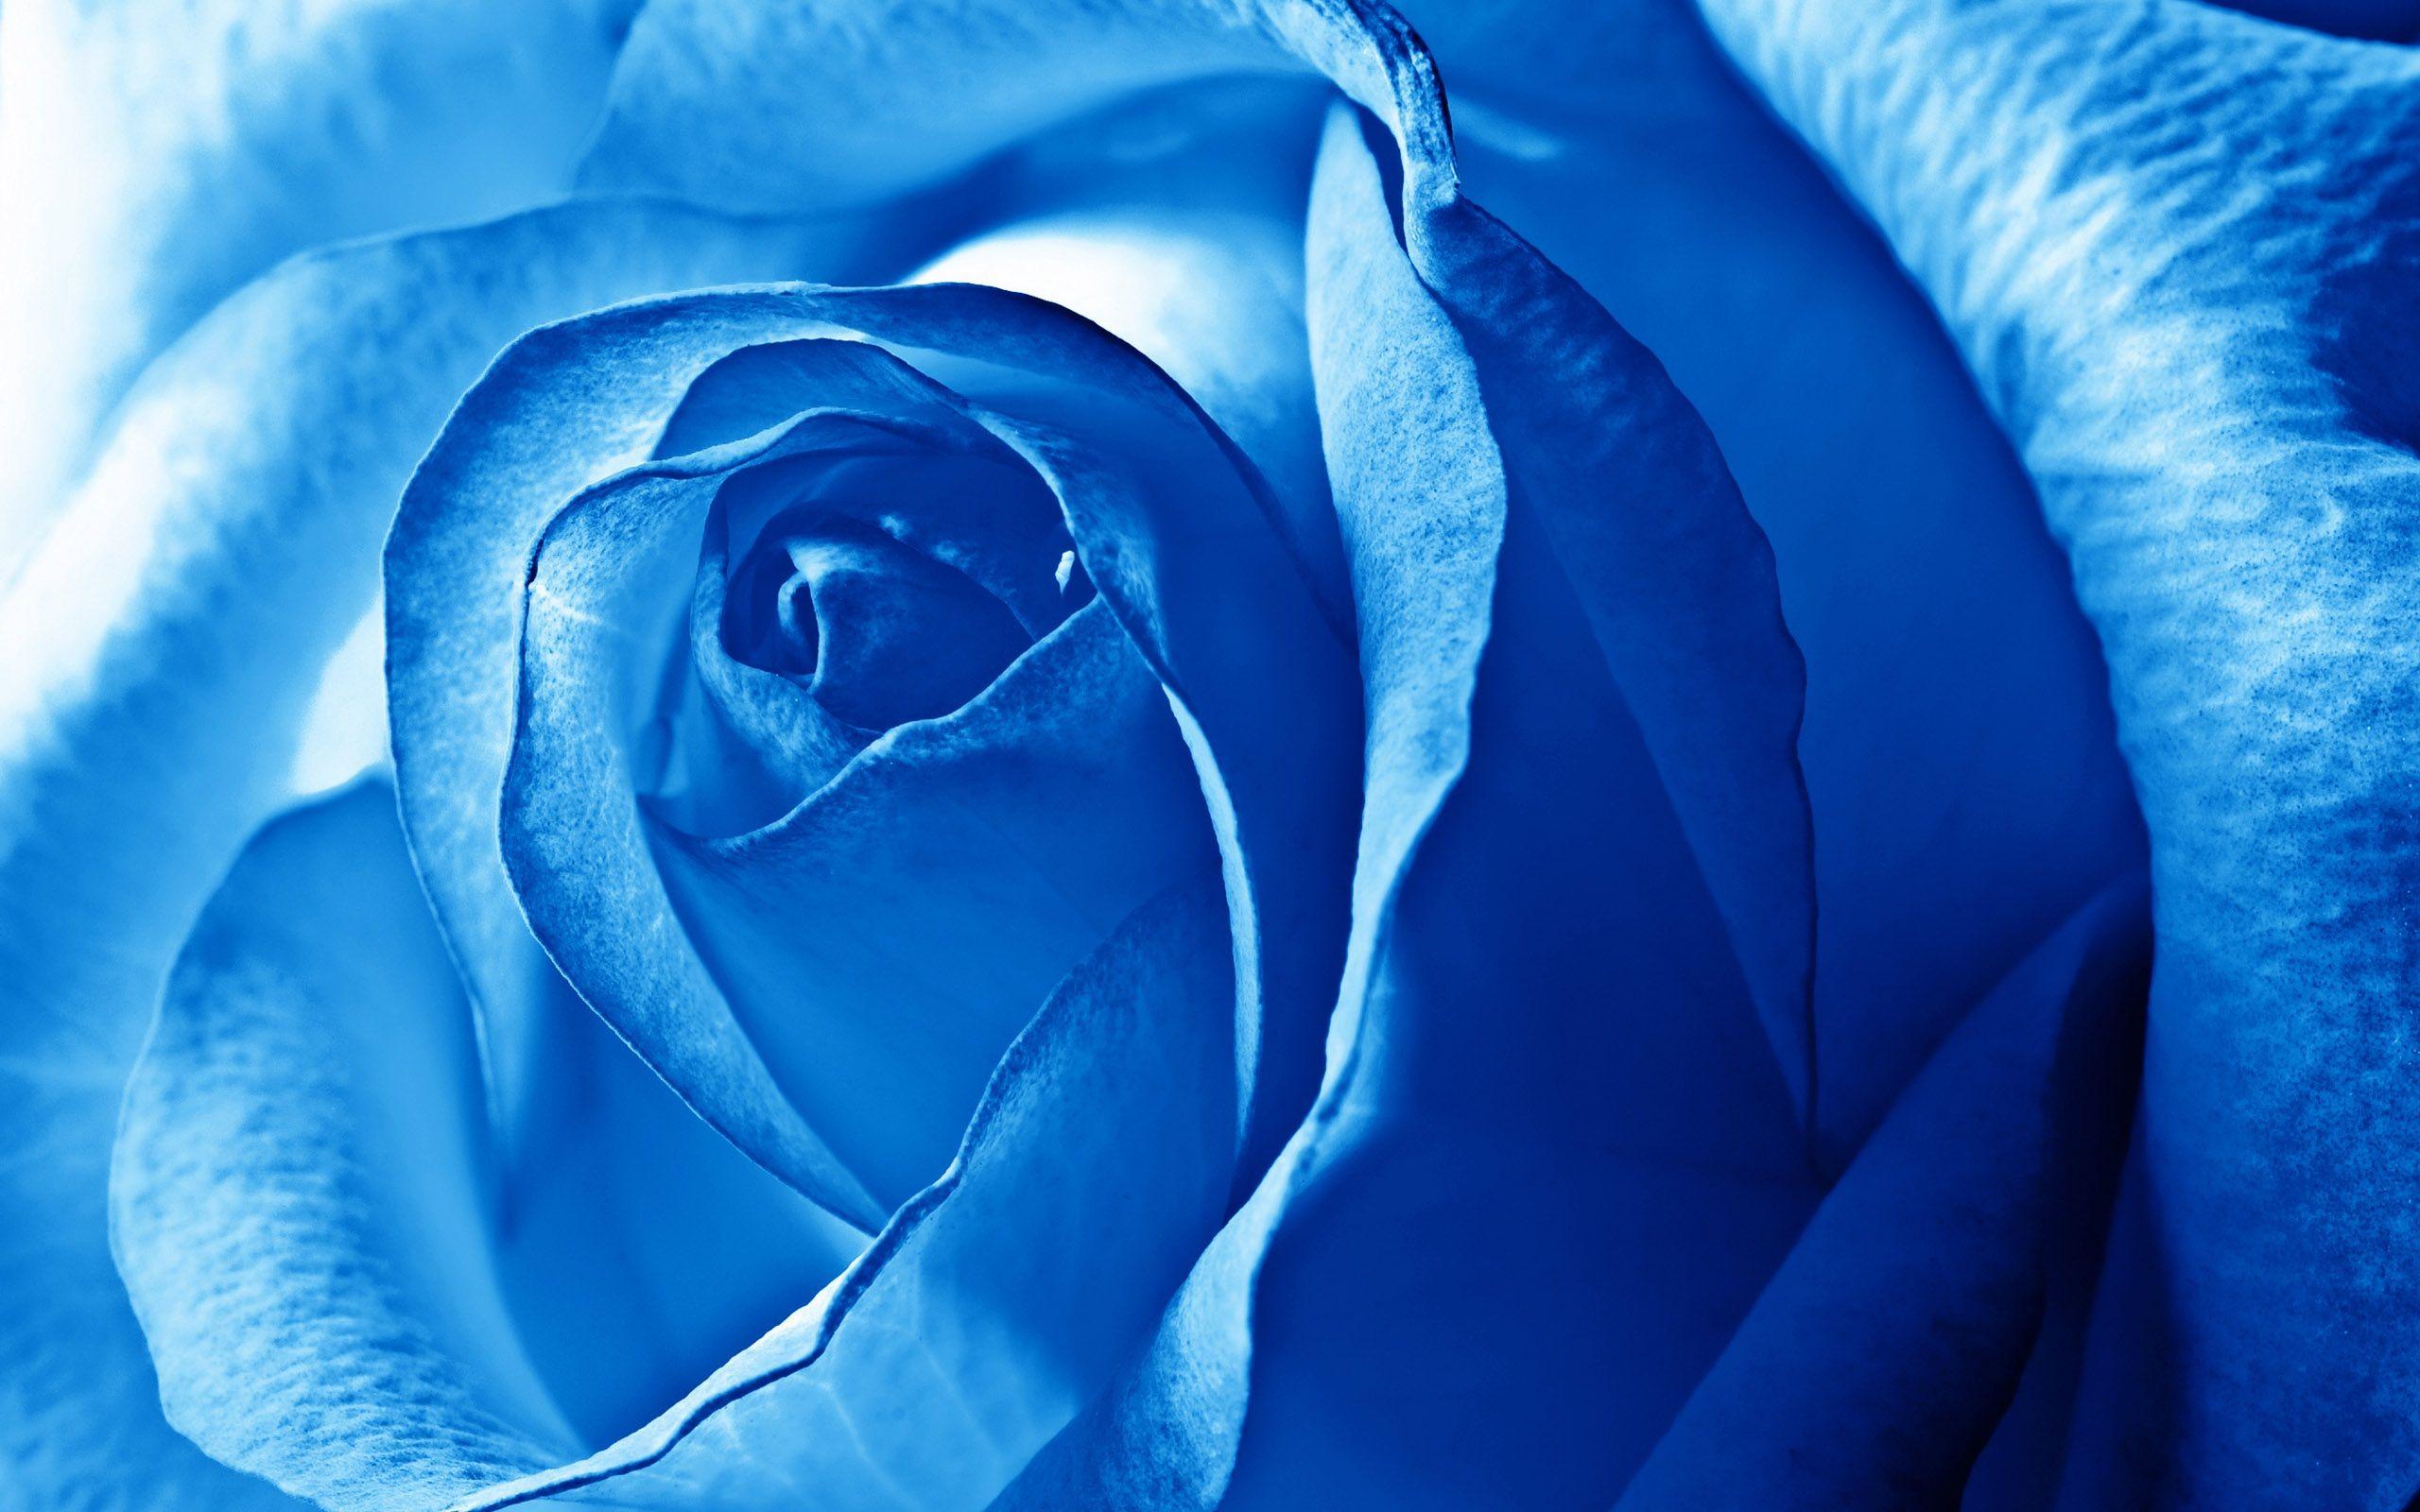 blue rose background hd